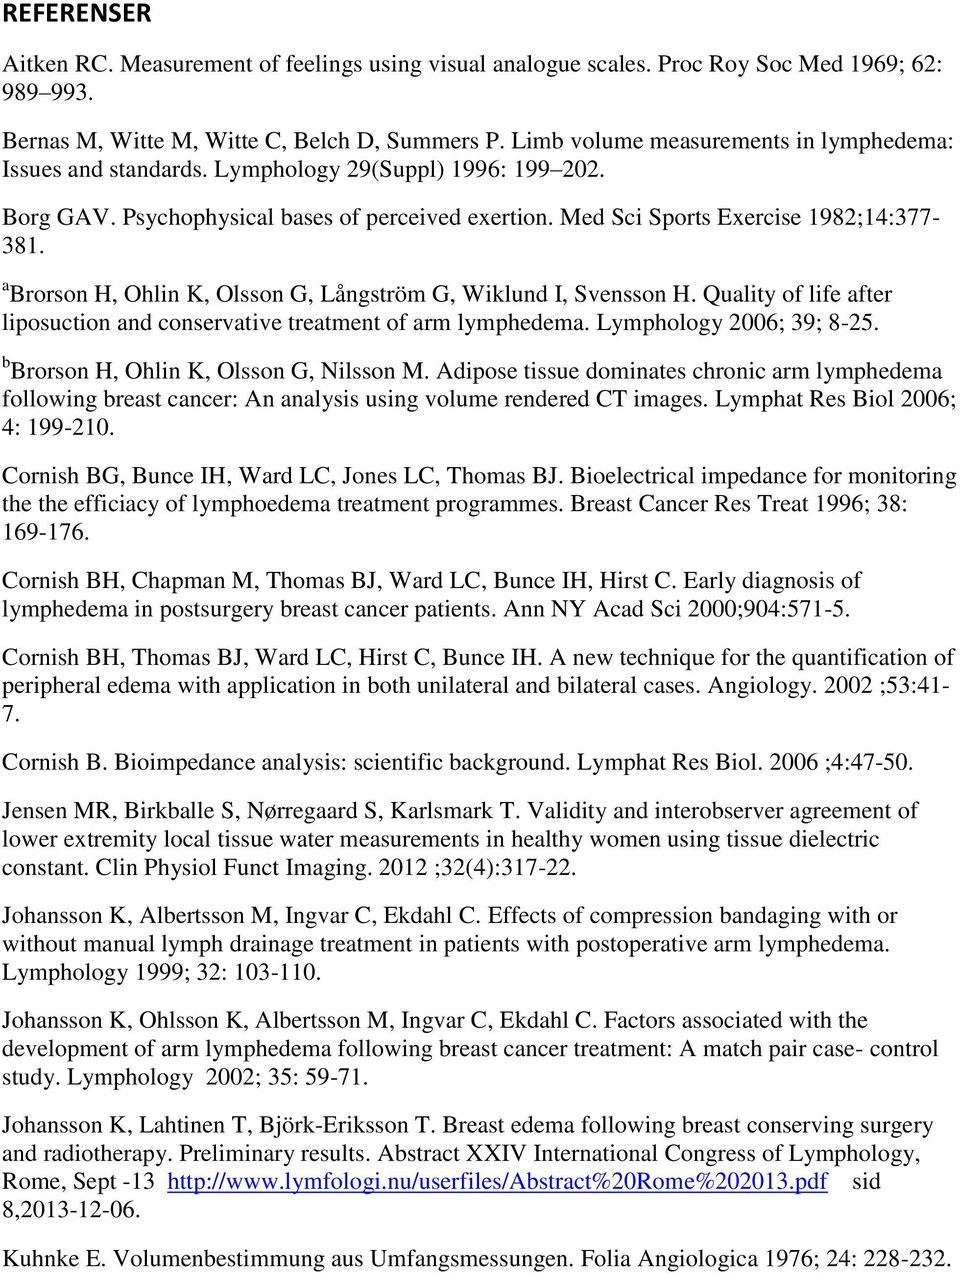 a Brorson H, Ohlin K, Olsson G, Långström G, Wiklund I, Svensson H. Quality of life after liposuction and conservative treatment of arm lymphedema. Lymphology 2006; 39; 8-25.